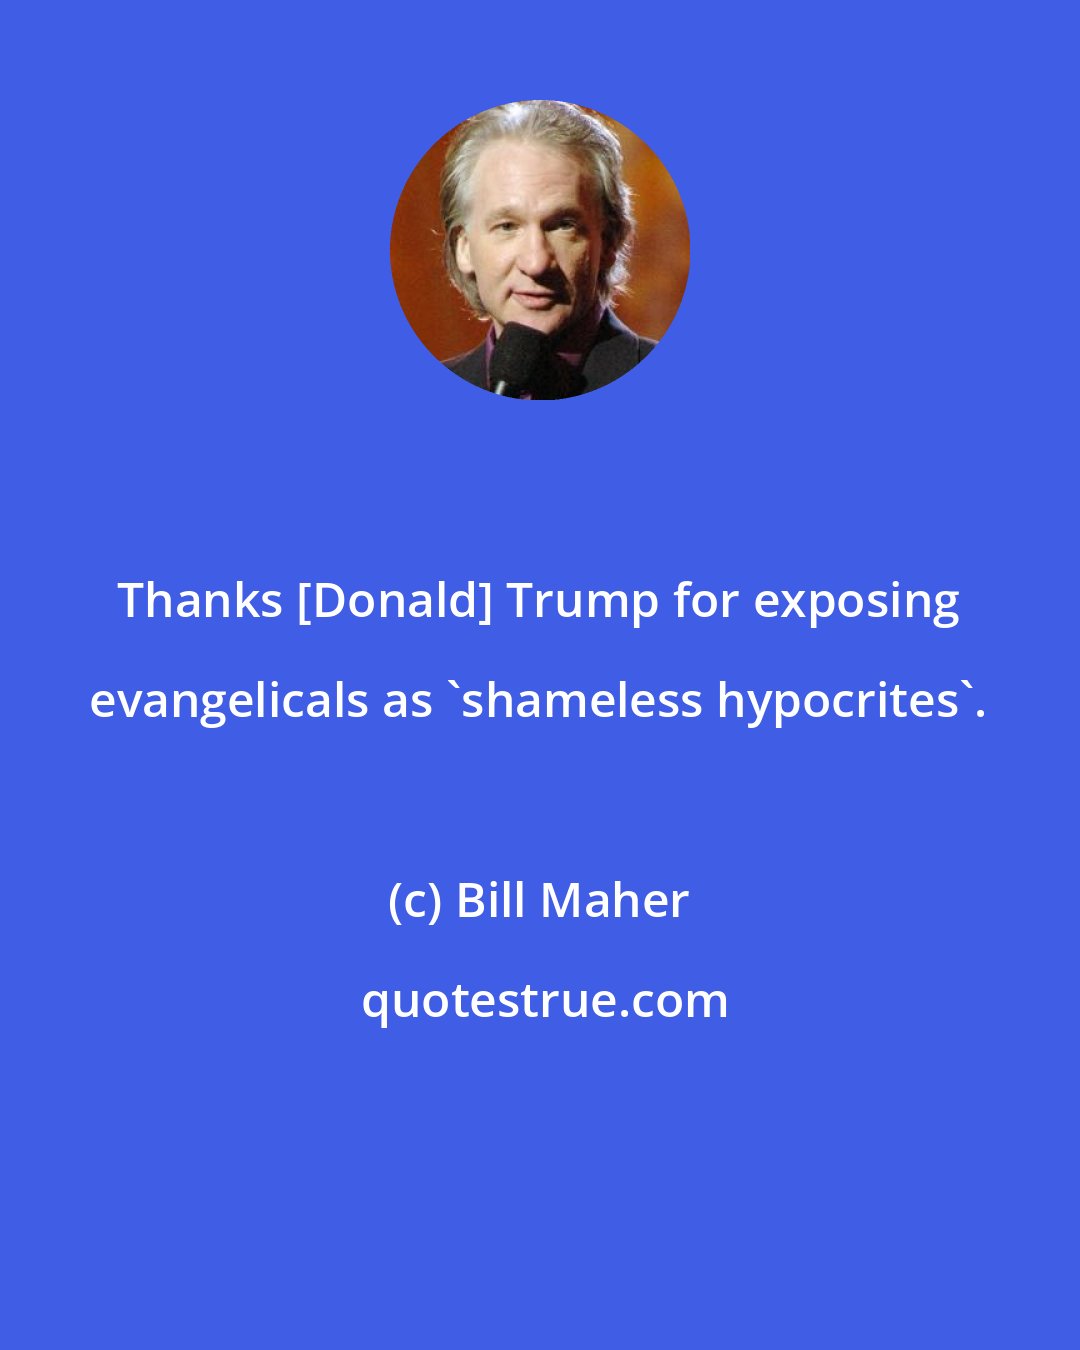 Bill Maher: Thanks [Donald] Trump for exposing evangelicals as 'shameless hypocrites'.